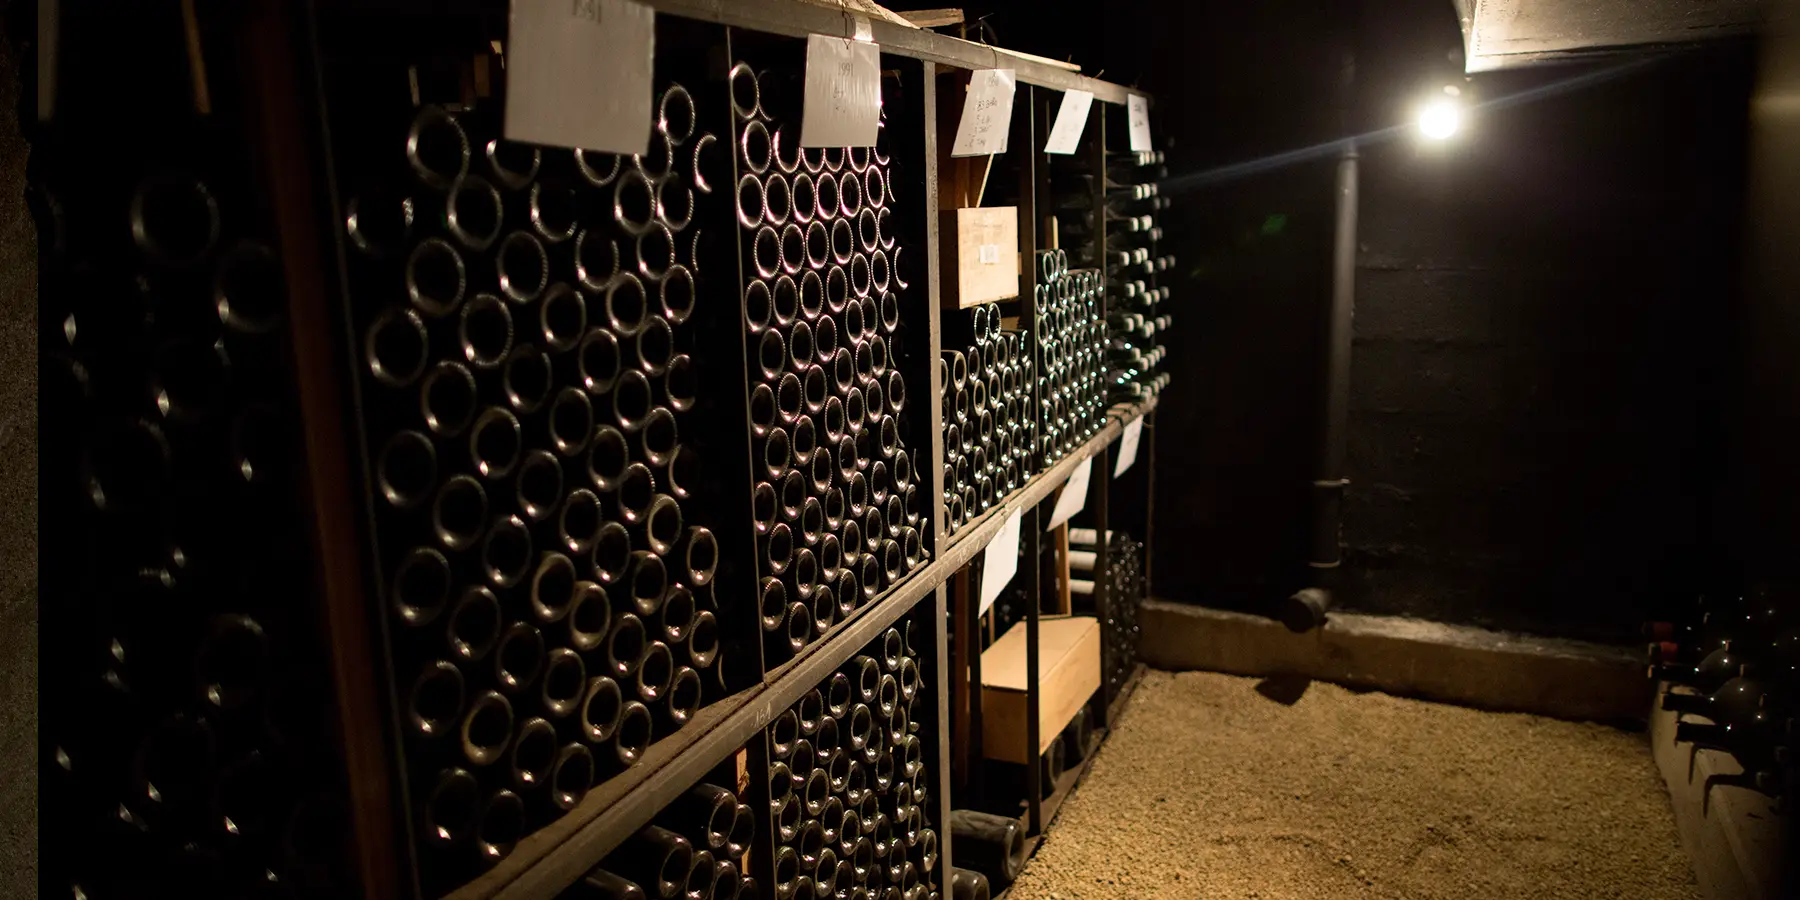 Wine storage conditions